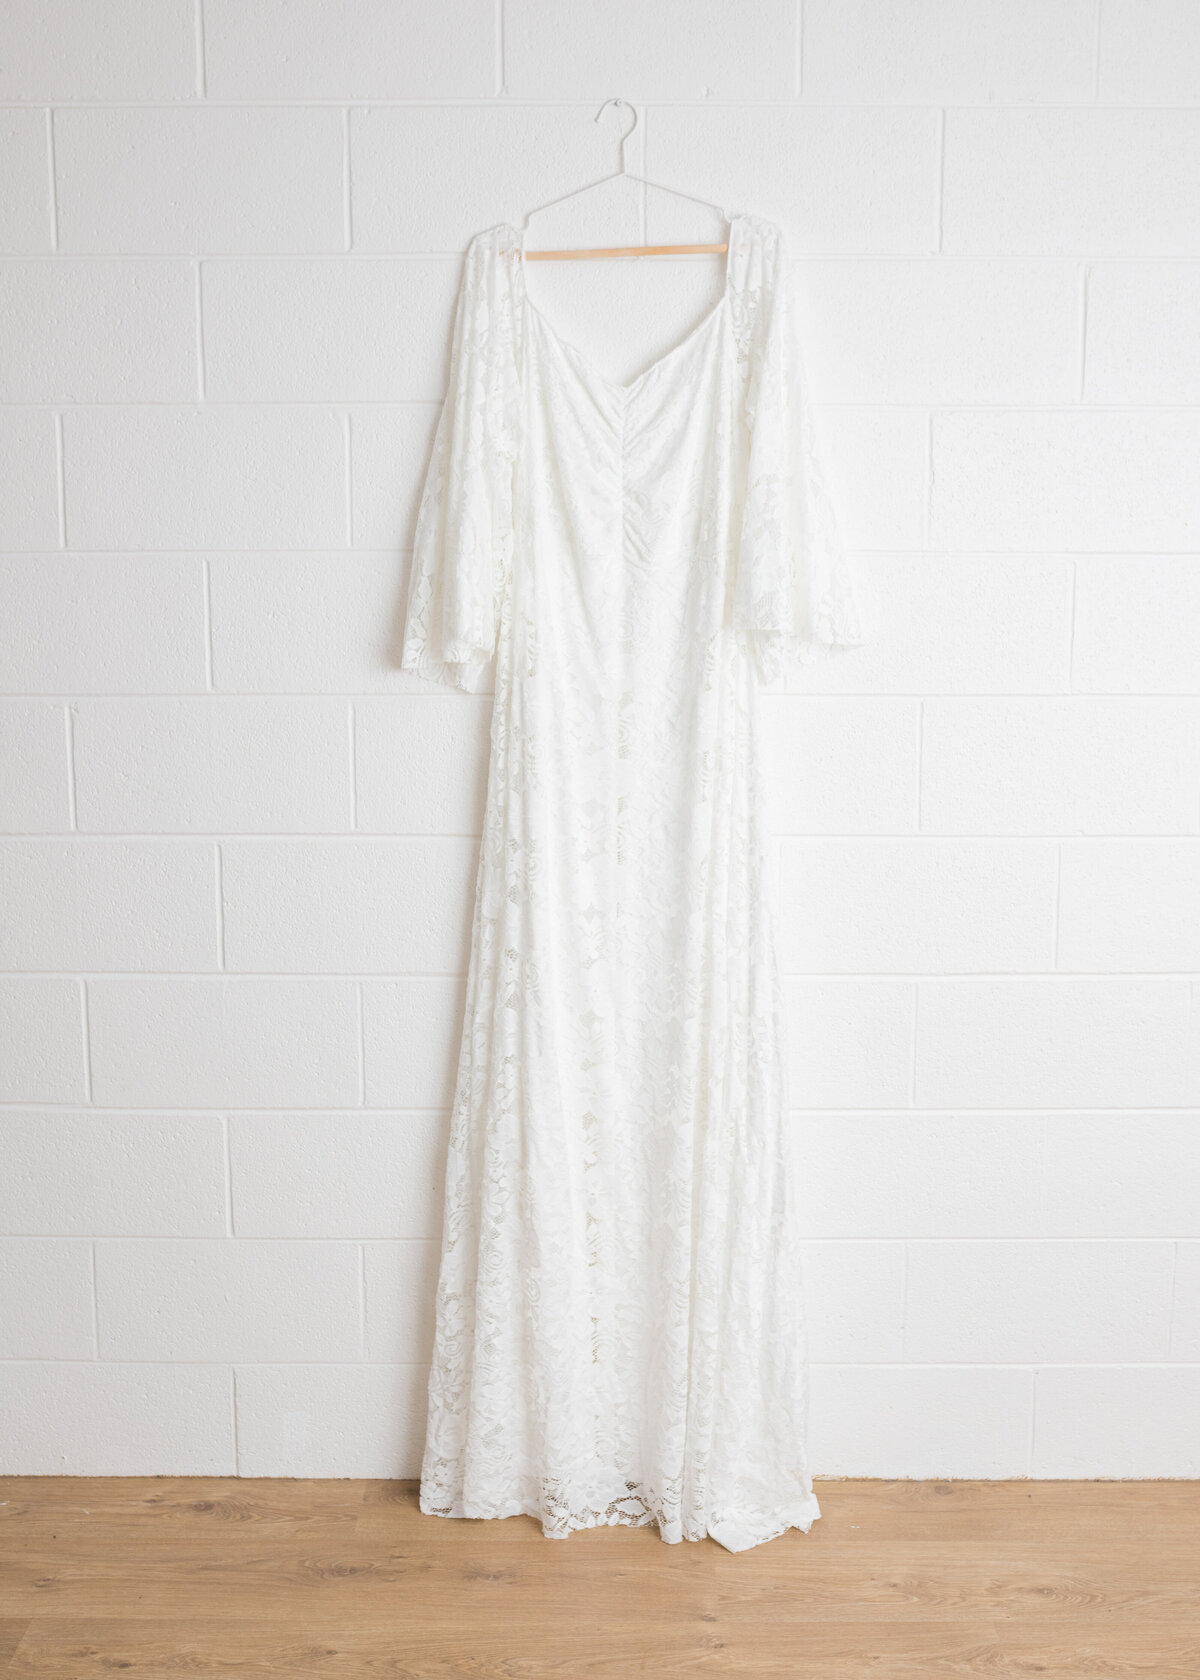 Elizabeth Eden Boho Lace Maternity Gown in XL suitable for sizes up to AU 24 | Studio Wardrobe image by Lauren Vanier Photography